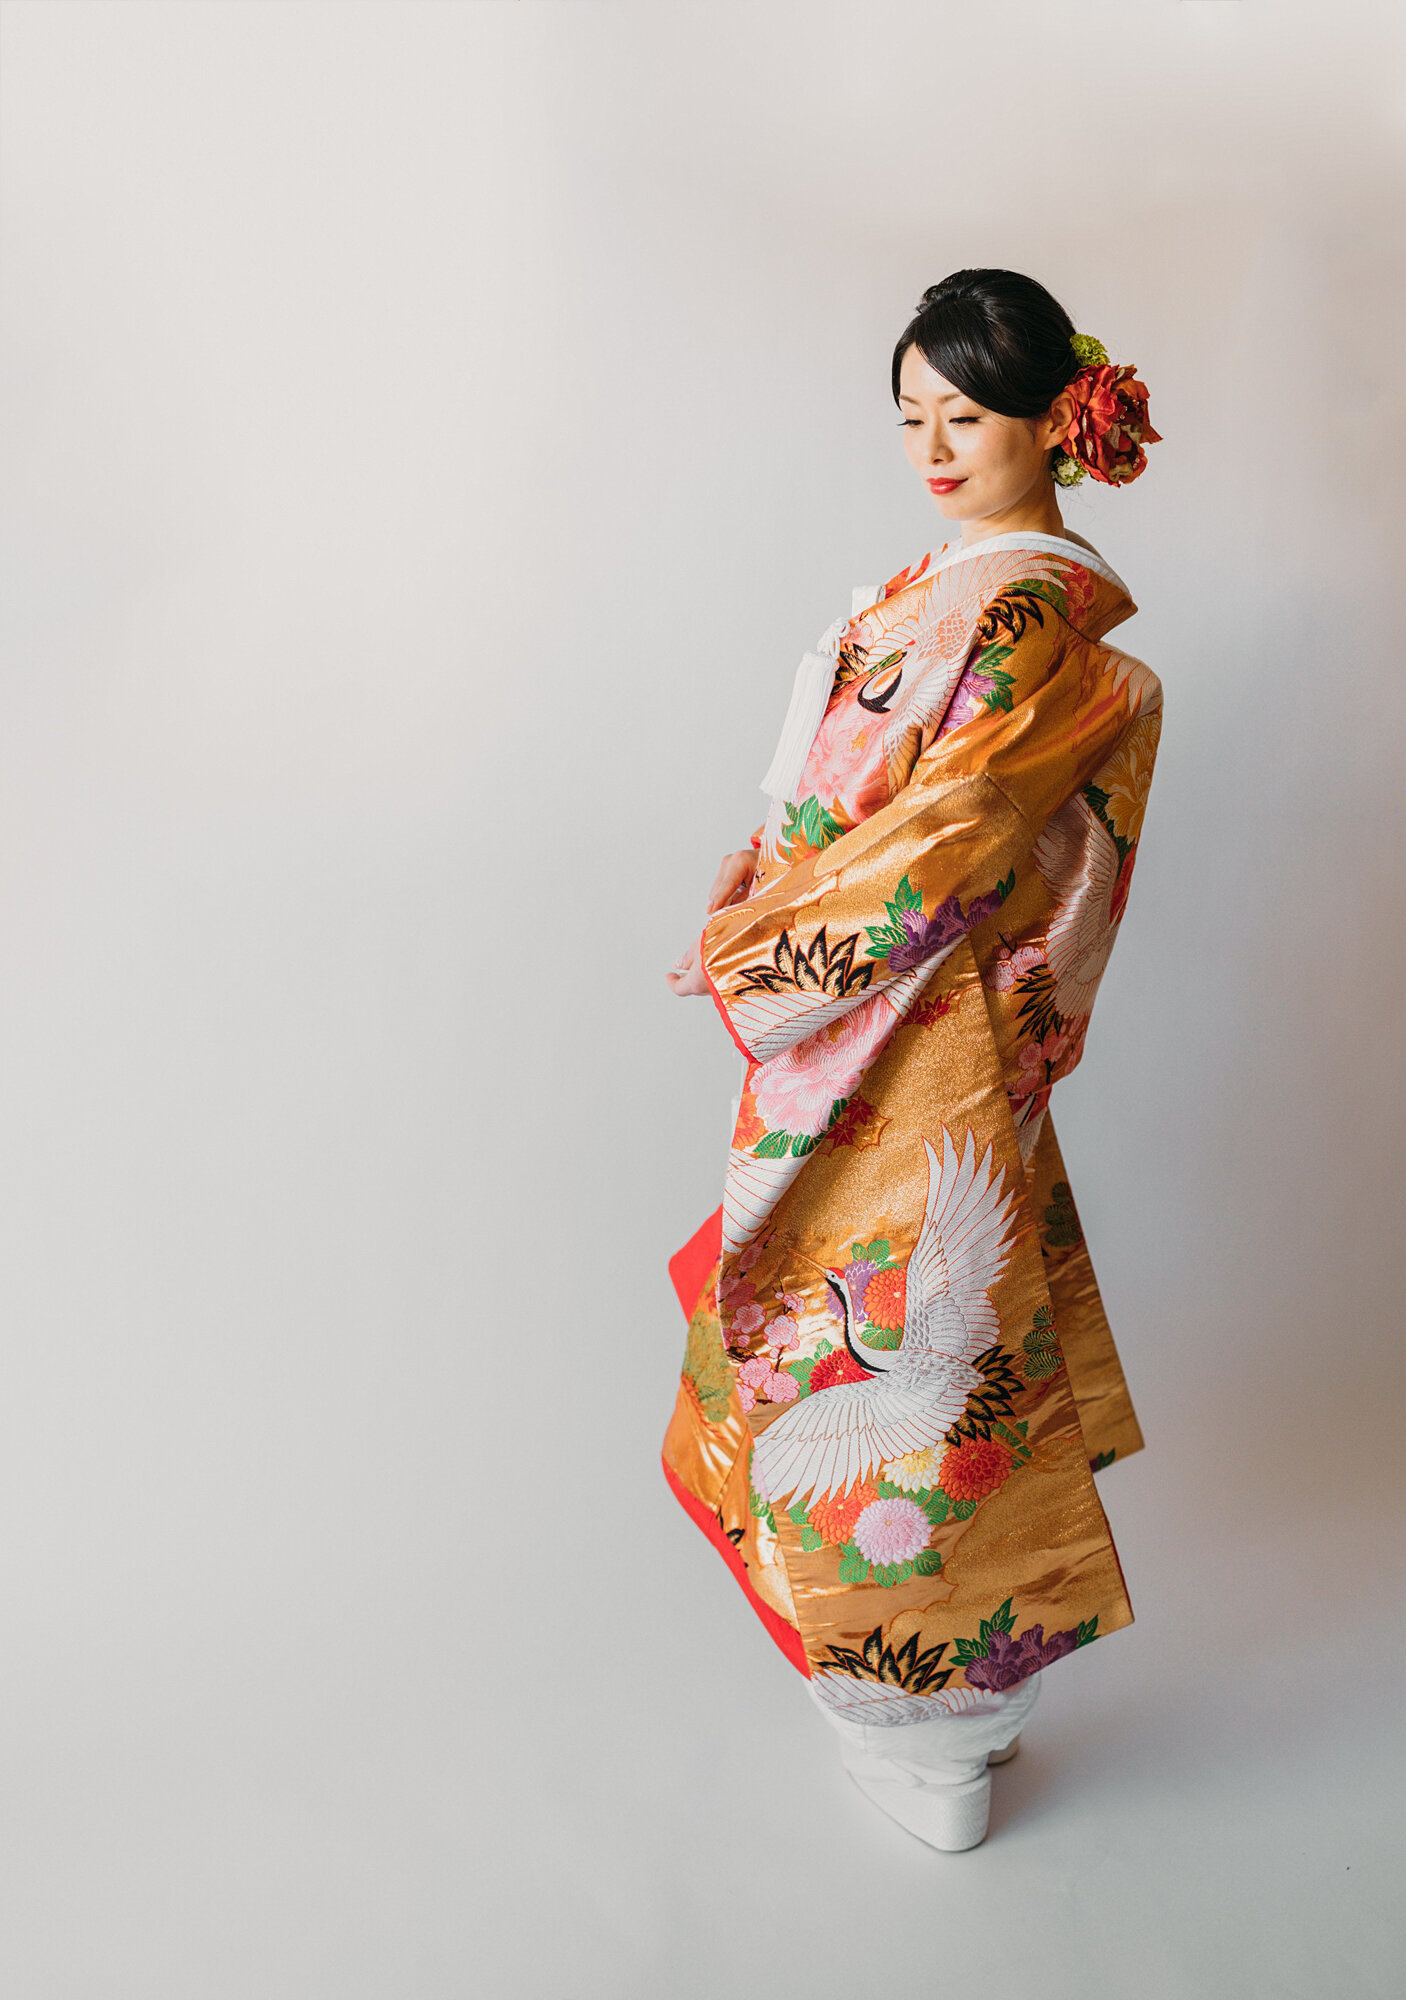 Japanese_bride_kimono-61.jpg